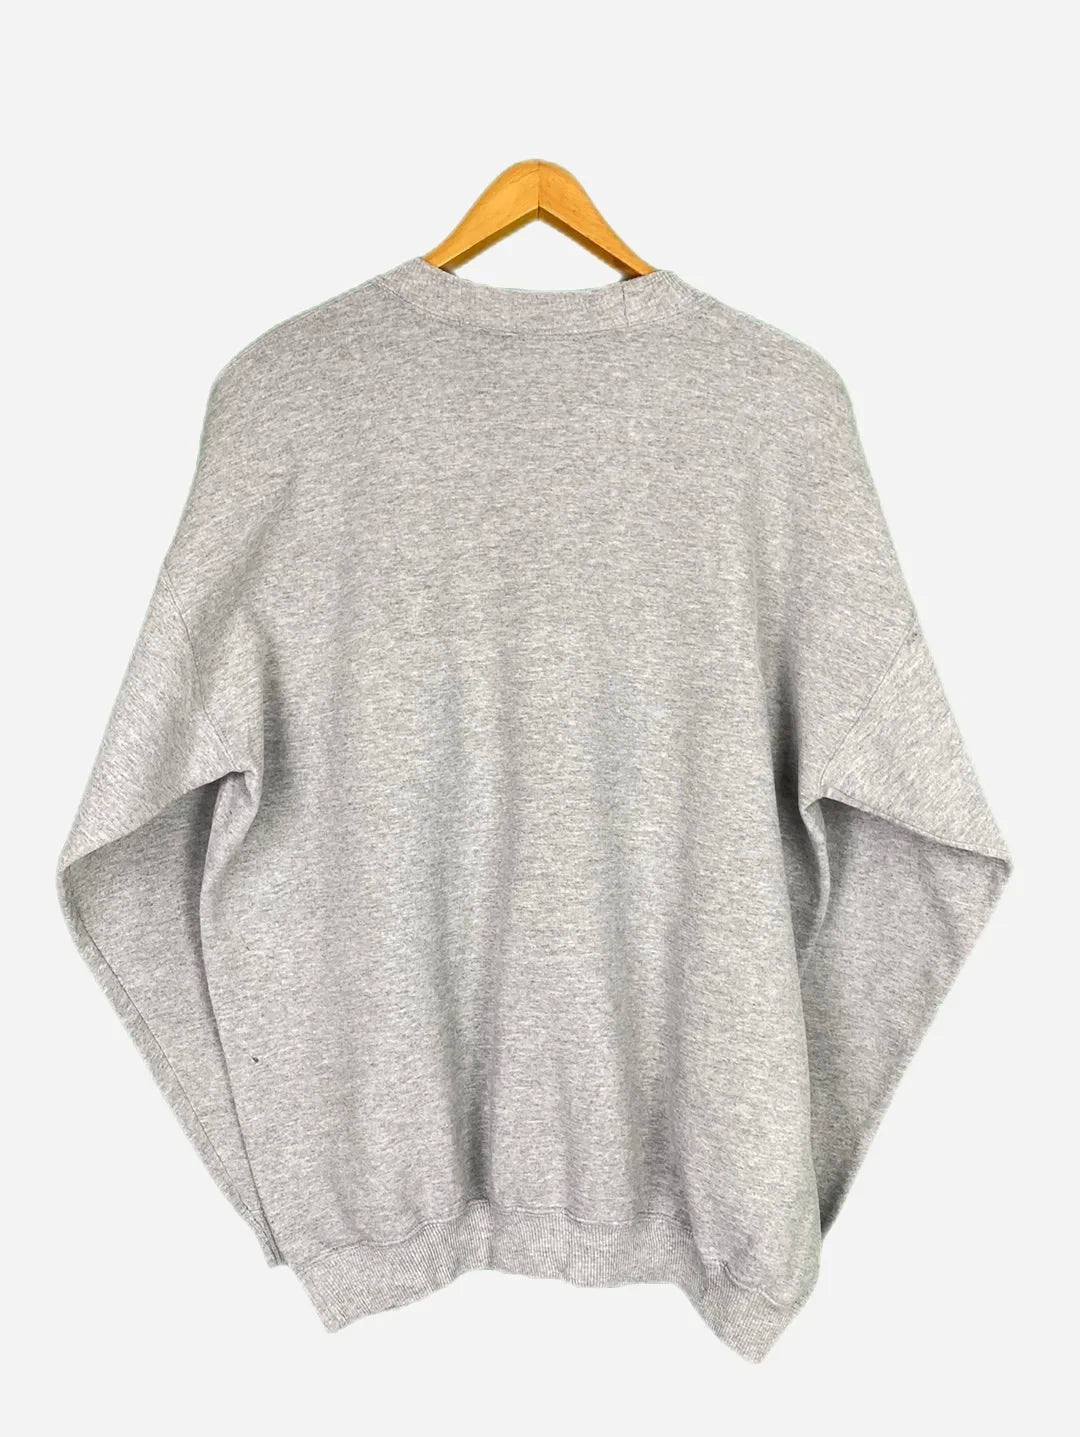 Lee Washington State Sweater (XL)